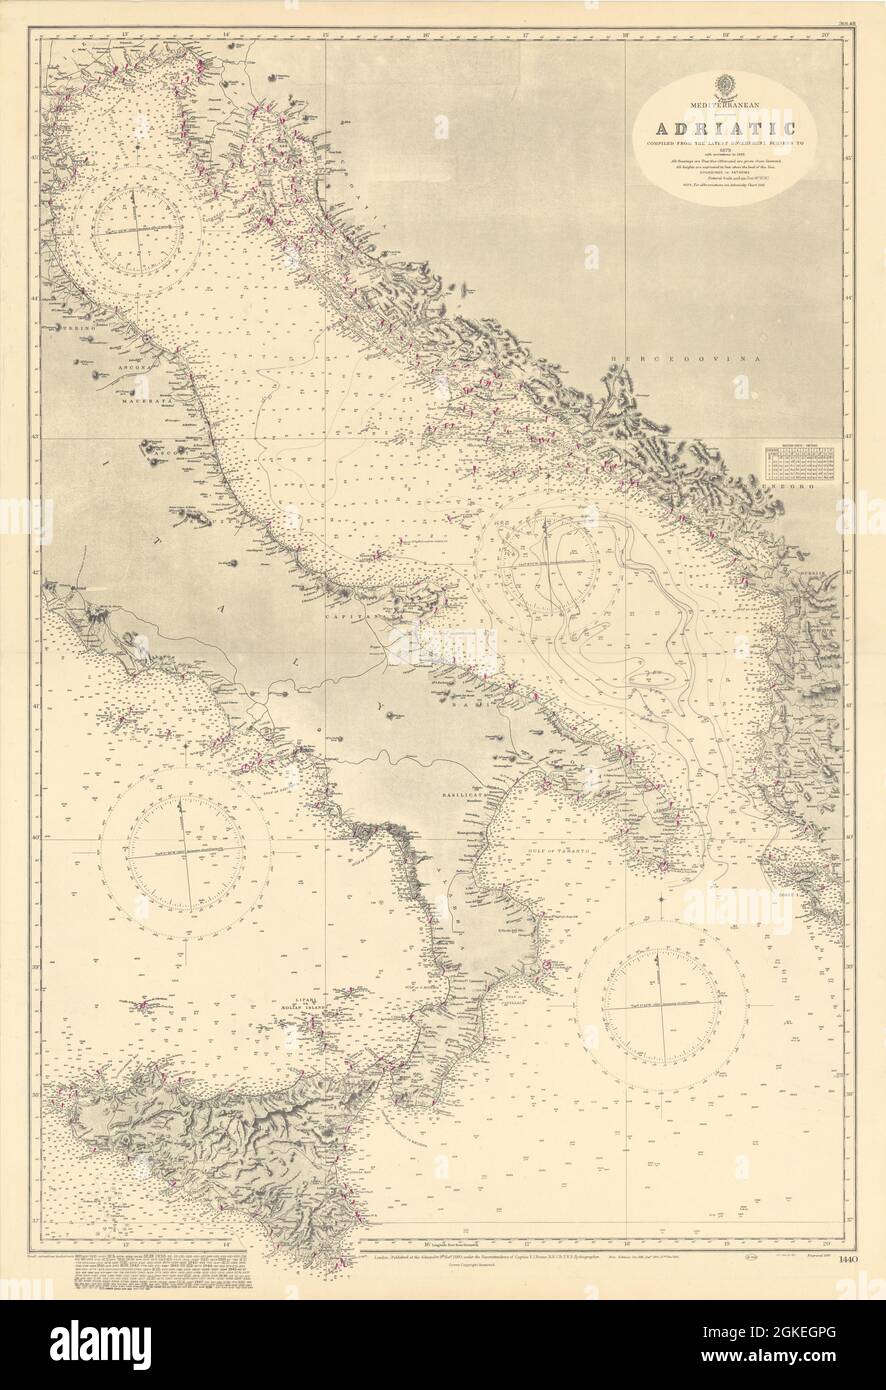 Mediterranean Adriatic Italy Croatia. ADMIRALTY sea chart 1880 (1949) old map Stock Photo